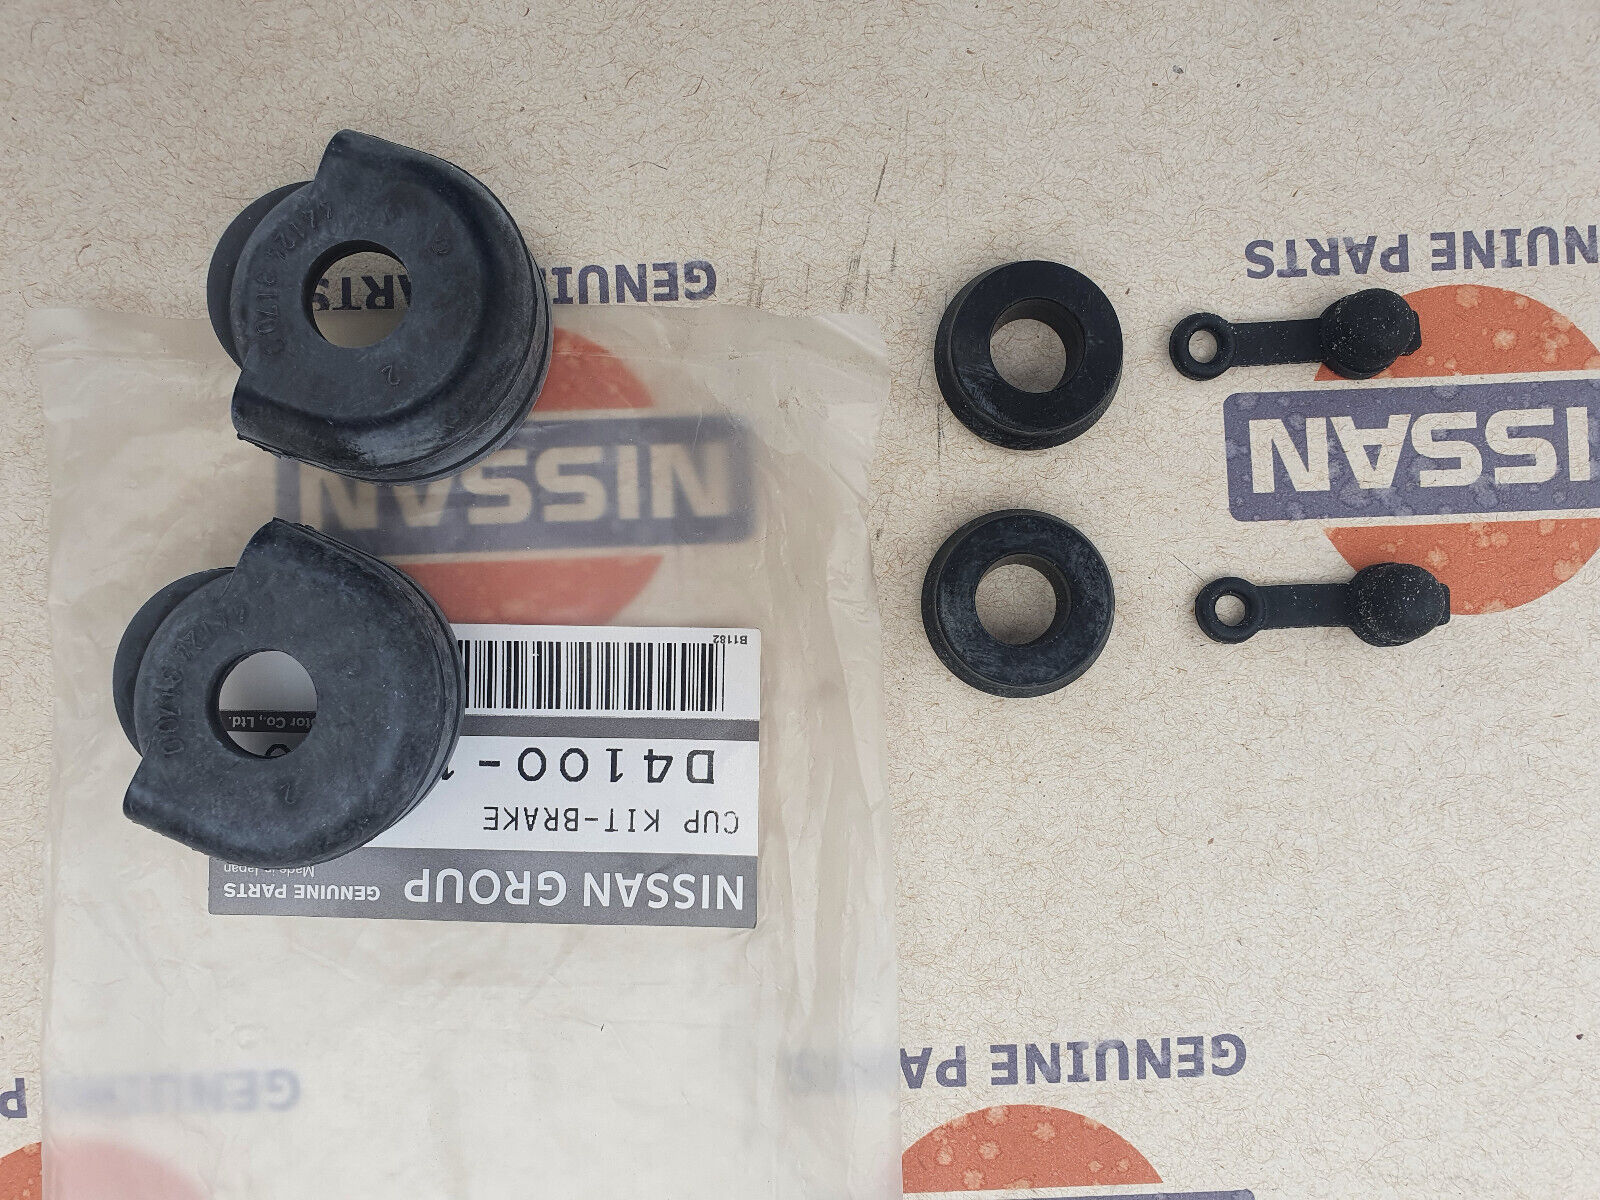 Rear Wheel Cylinder Repair Kit Genuine DATSUN 1200 (Fits NISSAN B110 B120 510)